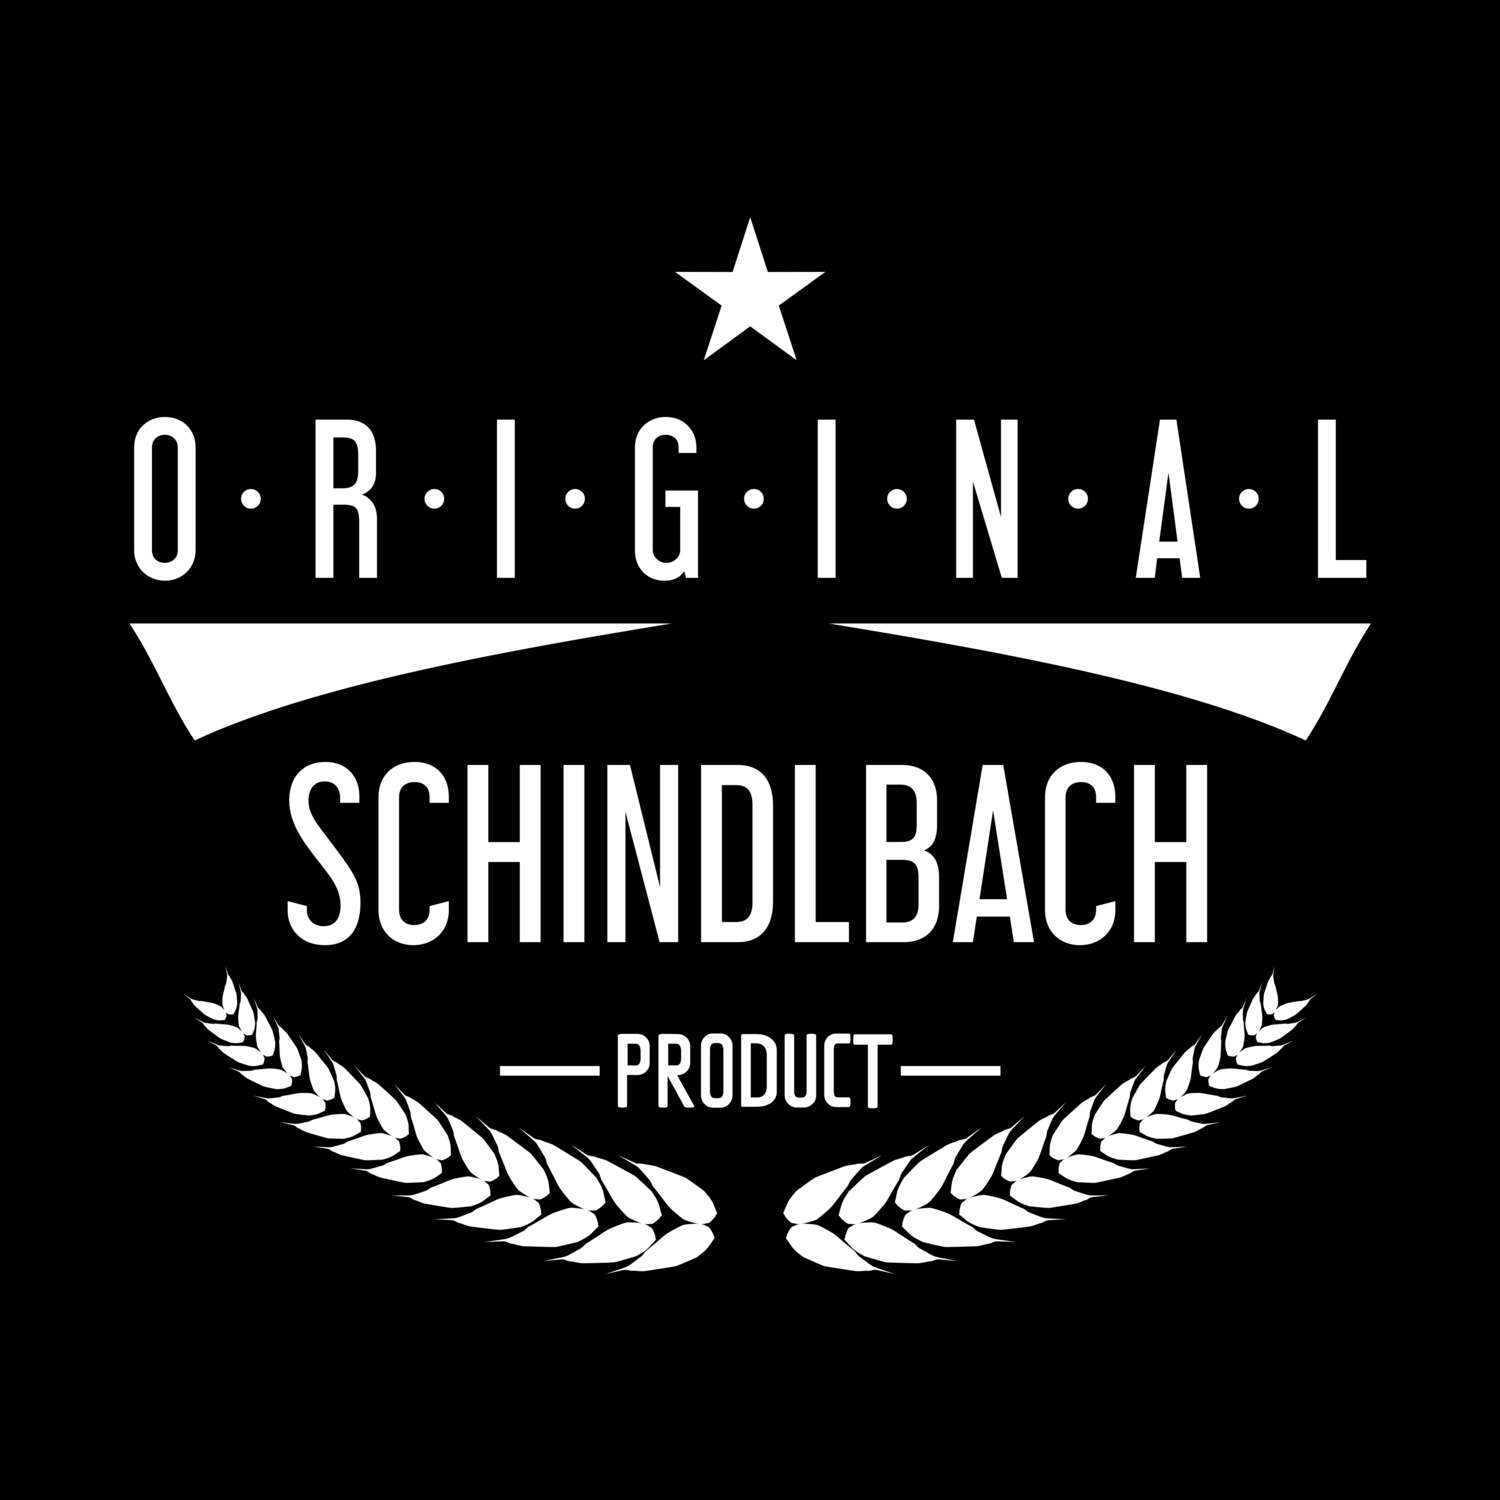 Schindlbach T-Shirt »Original Product«